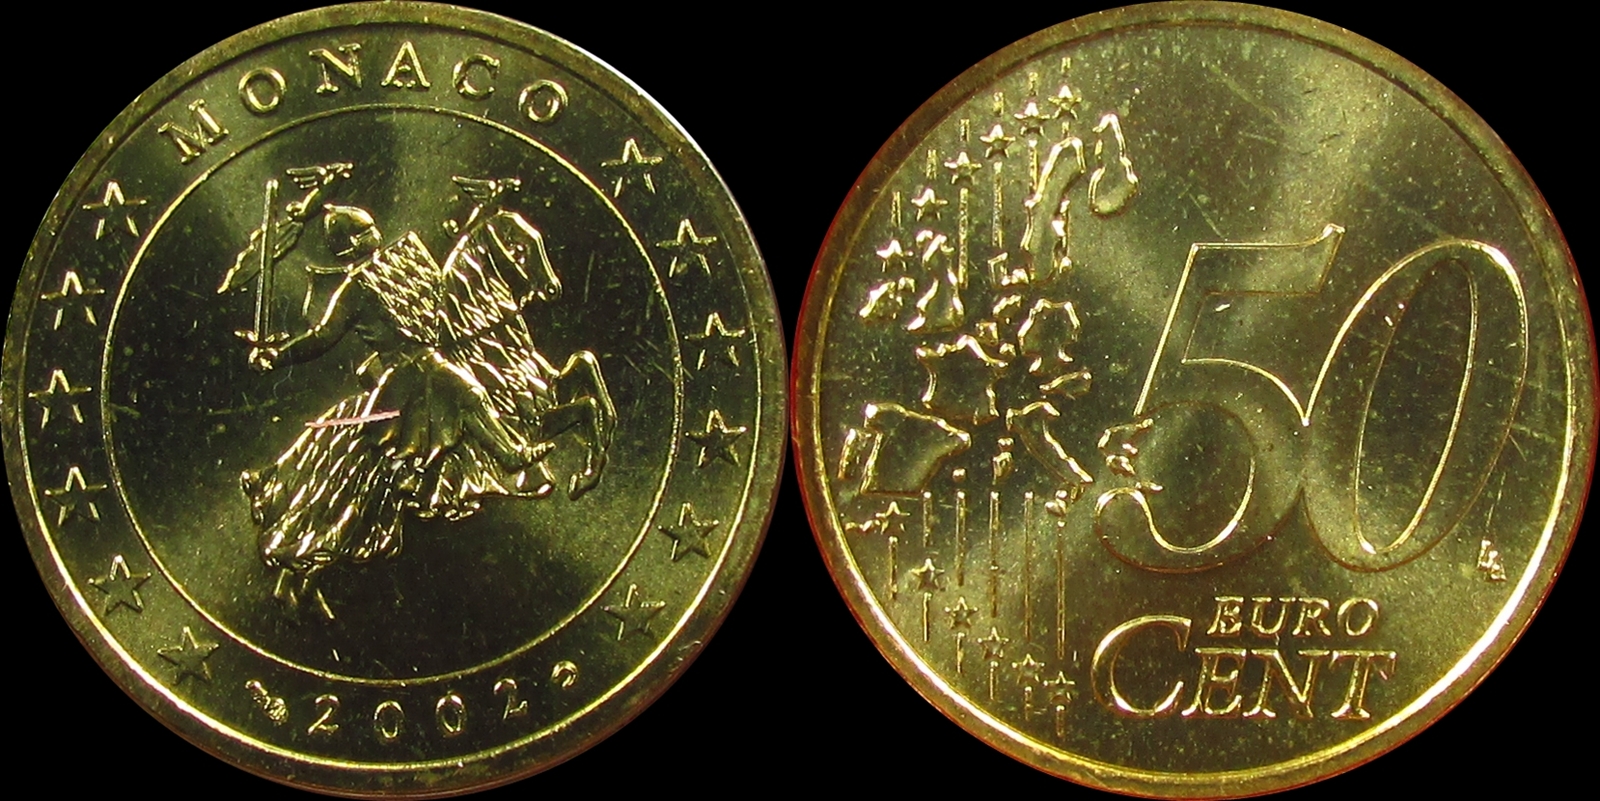 Monaco 2002 50 Euro Cents.jpg